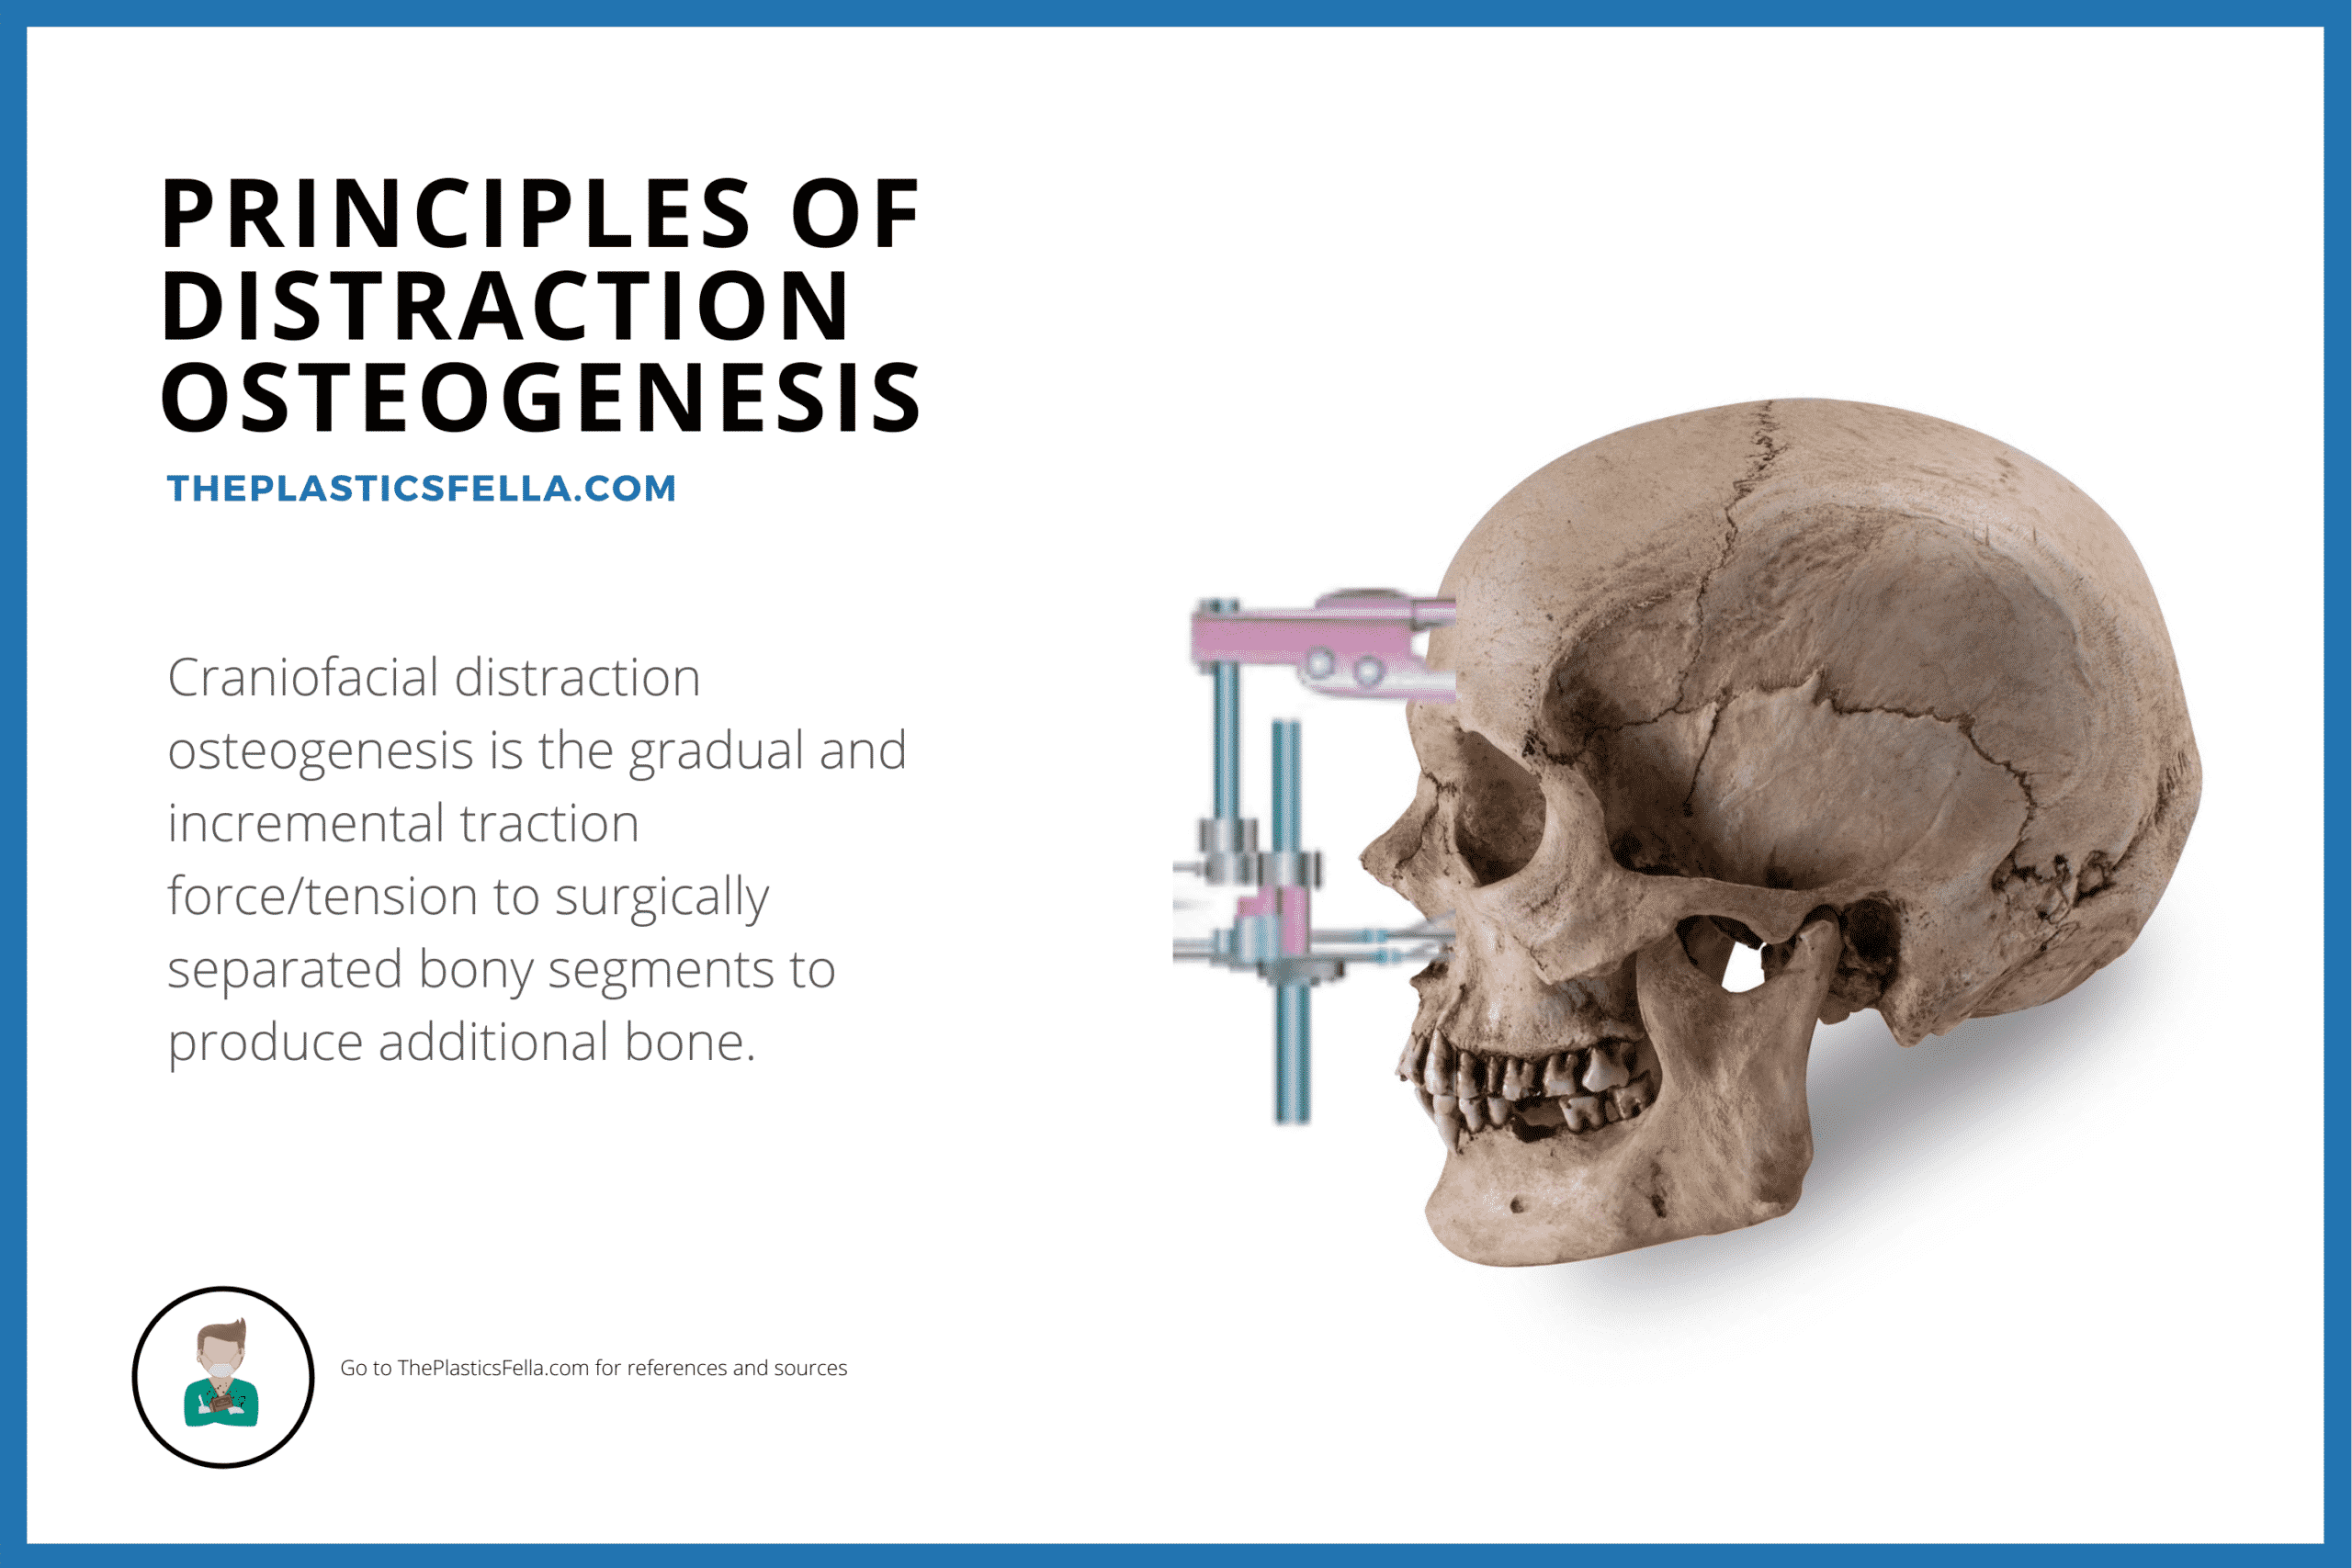 Principles of Craniofacial Distraction Osteogenesis